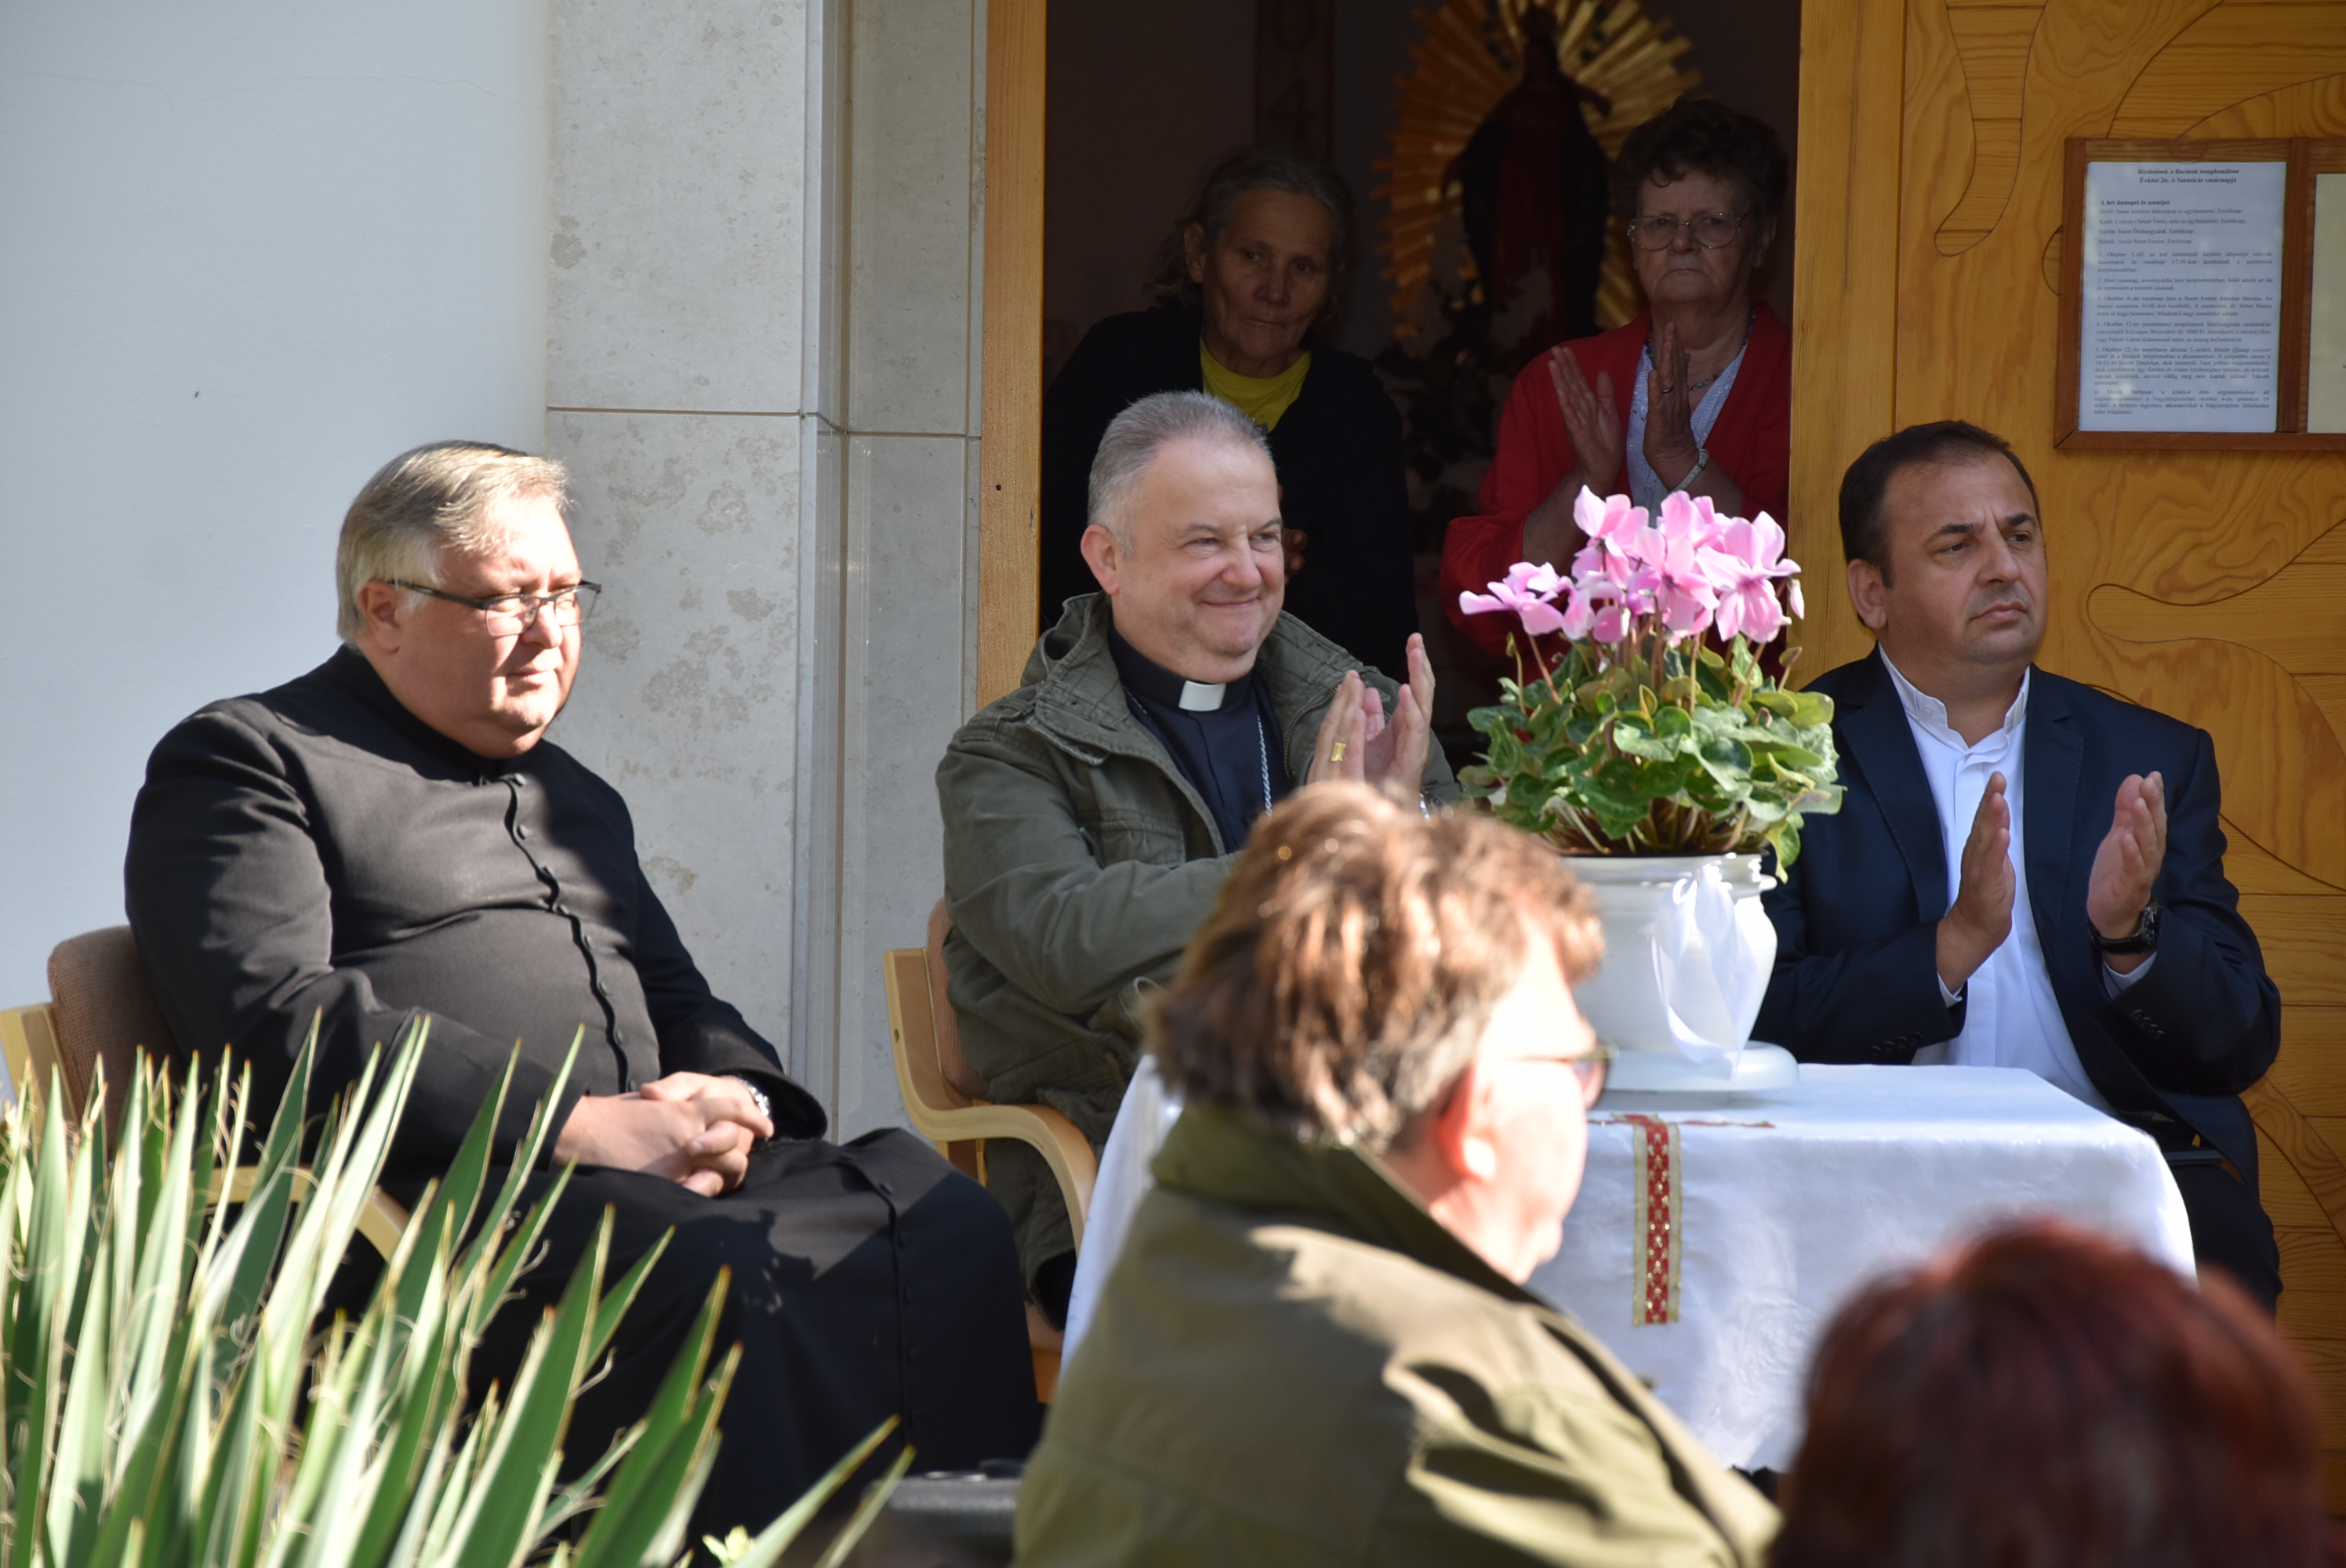 Assisi Szent Ferencet ünneplik_Dr. Pintér Gábor hondurasi pápai nuncius jelenlétében_2019.10.04.